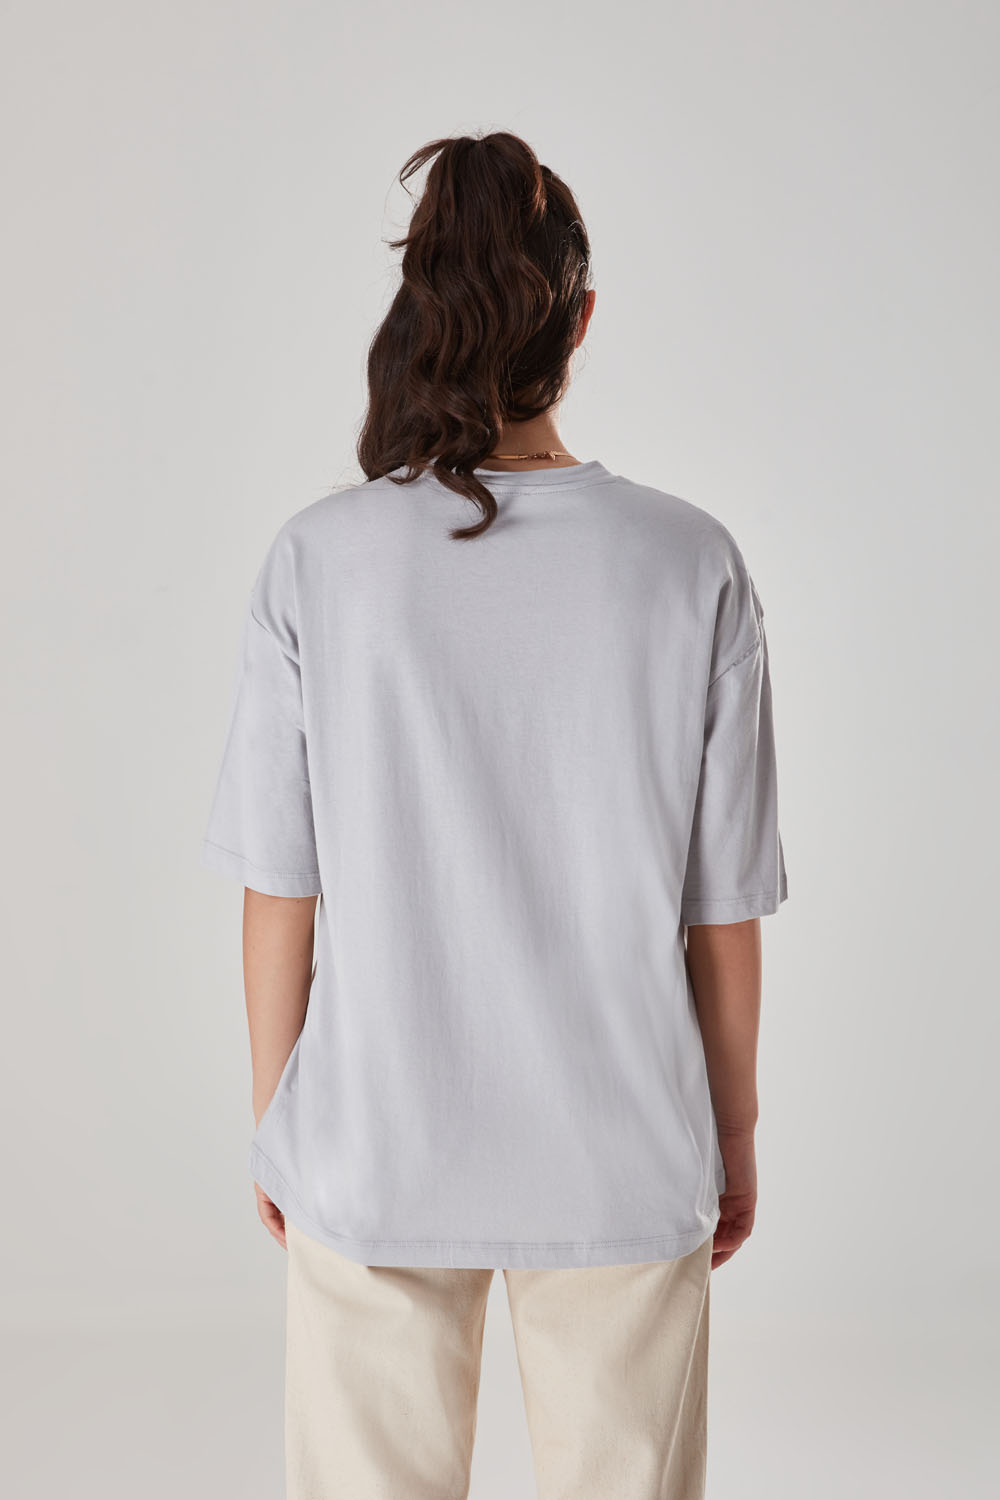 Pocket Detailed Gray T-Shirt